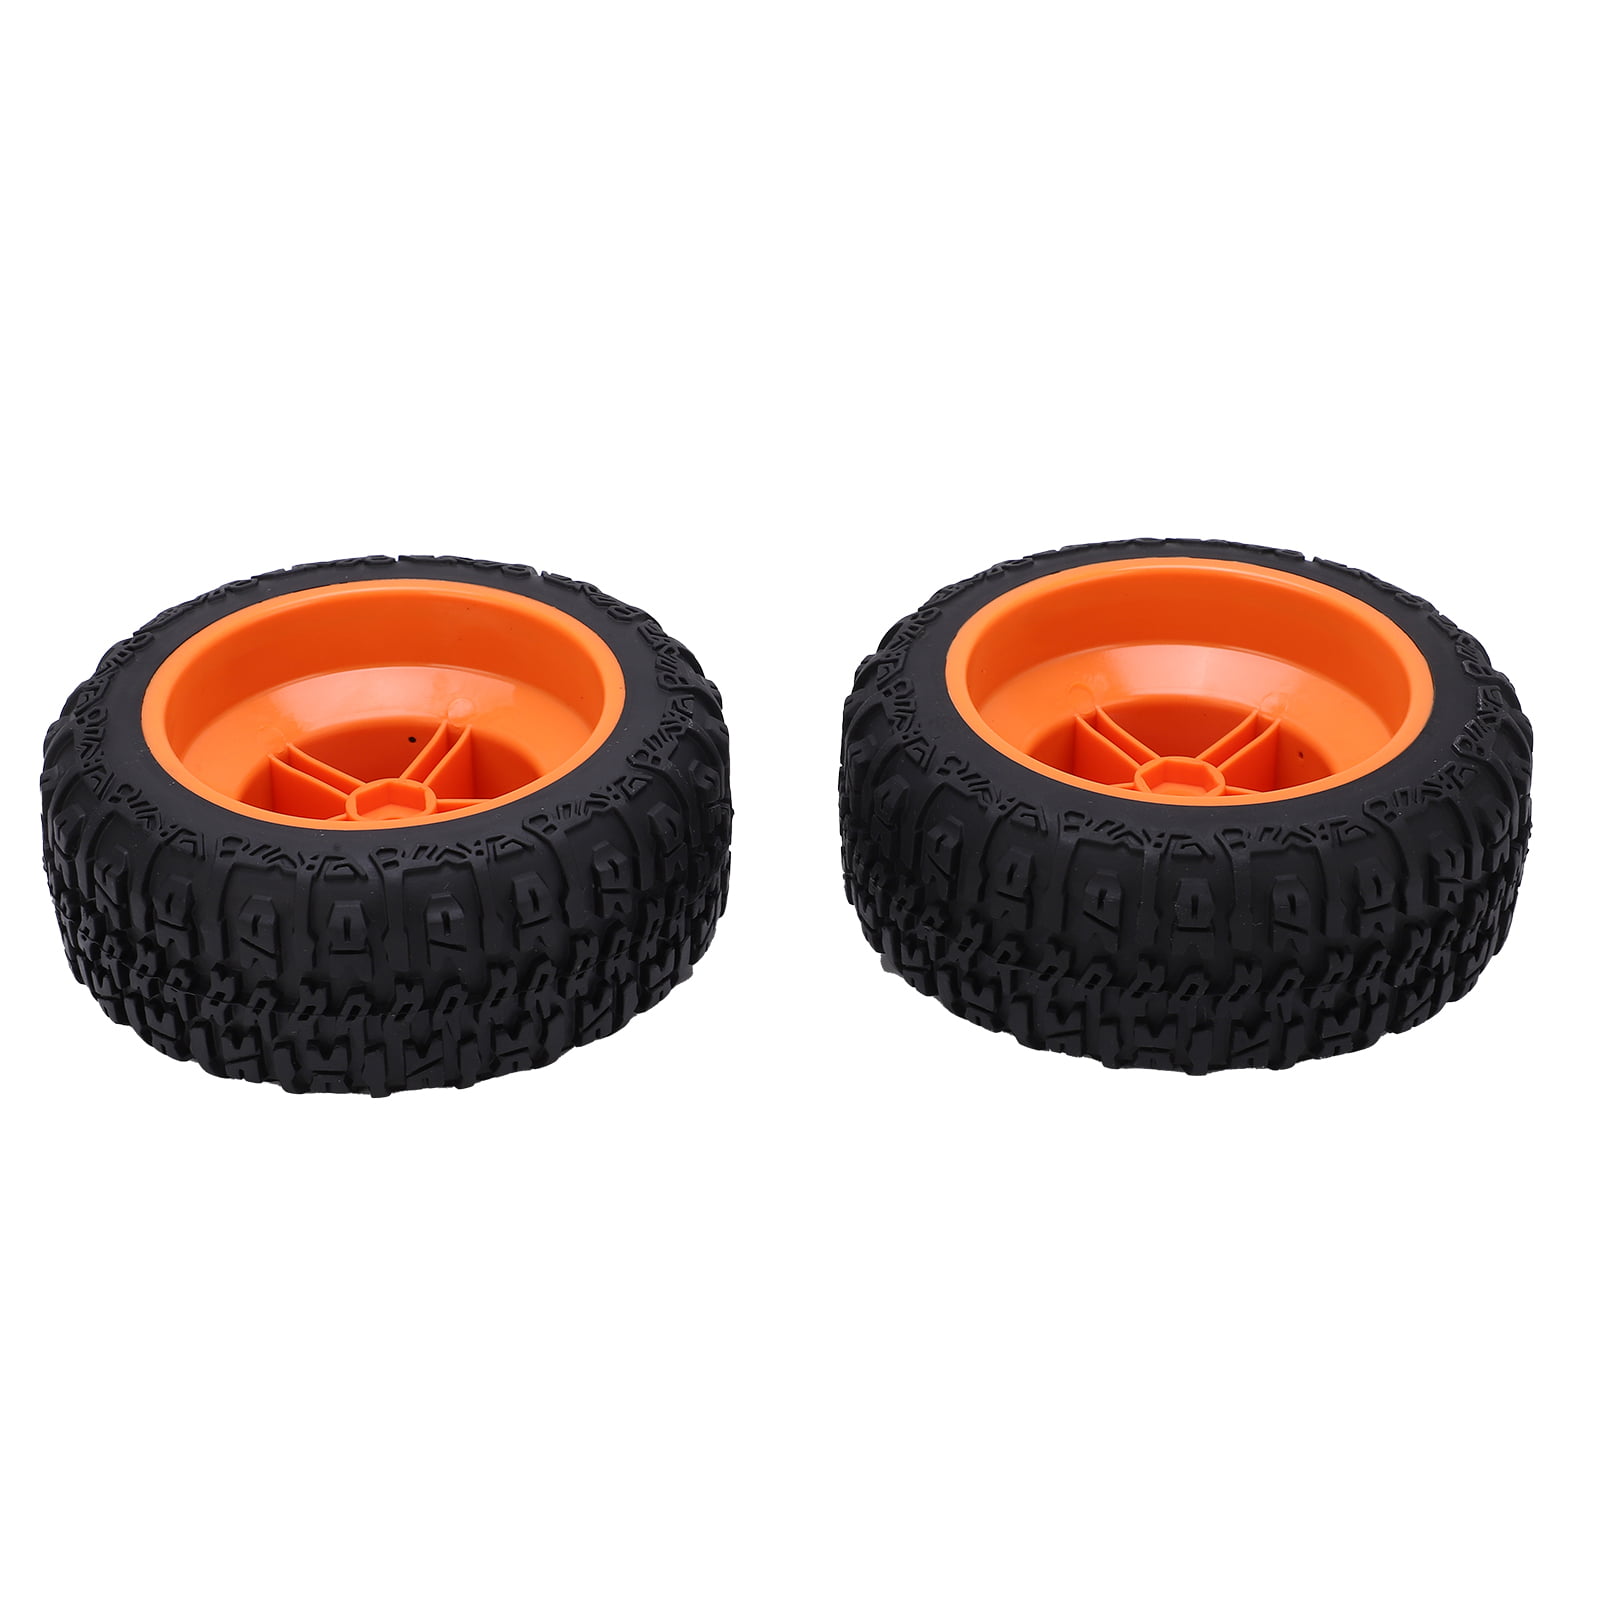 Brrnoo 2pcs Wheel Rim And Tires Set For Slash 1/10 RC Short Course Truck Tires Upgrade Parts Orange,RC Rubber Tires,Wheel Rim And Tires Set For HQ727